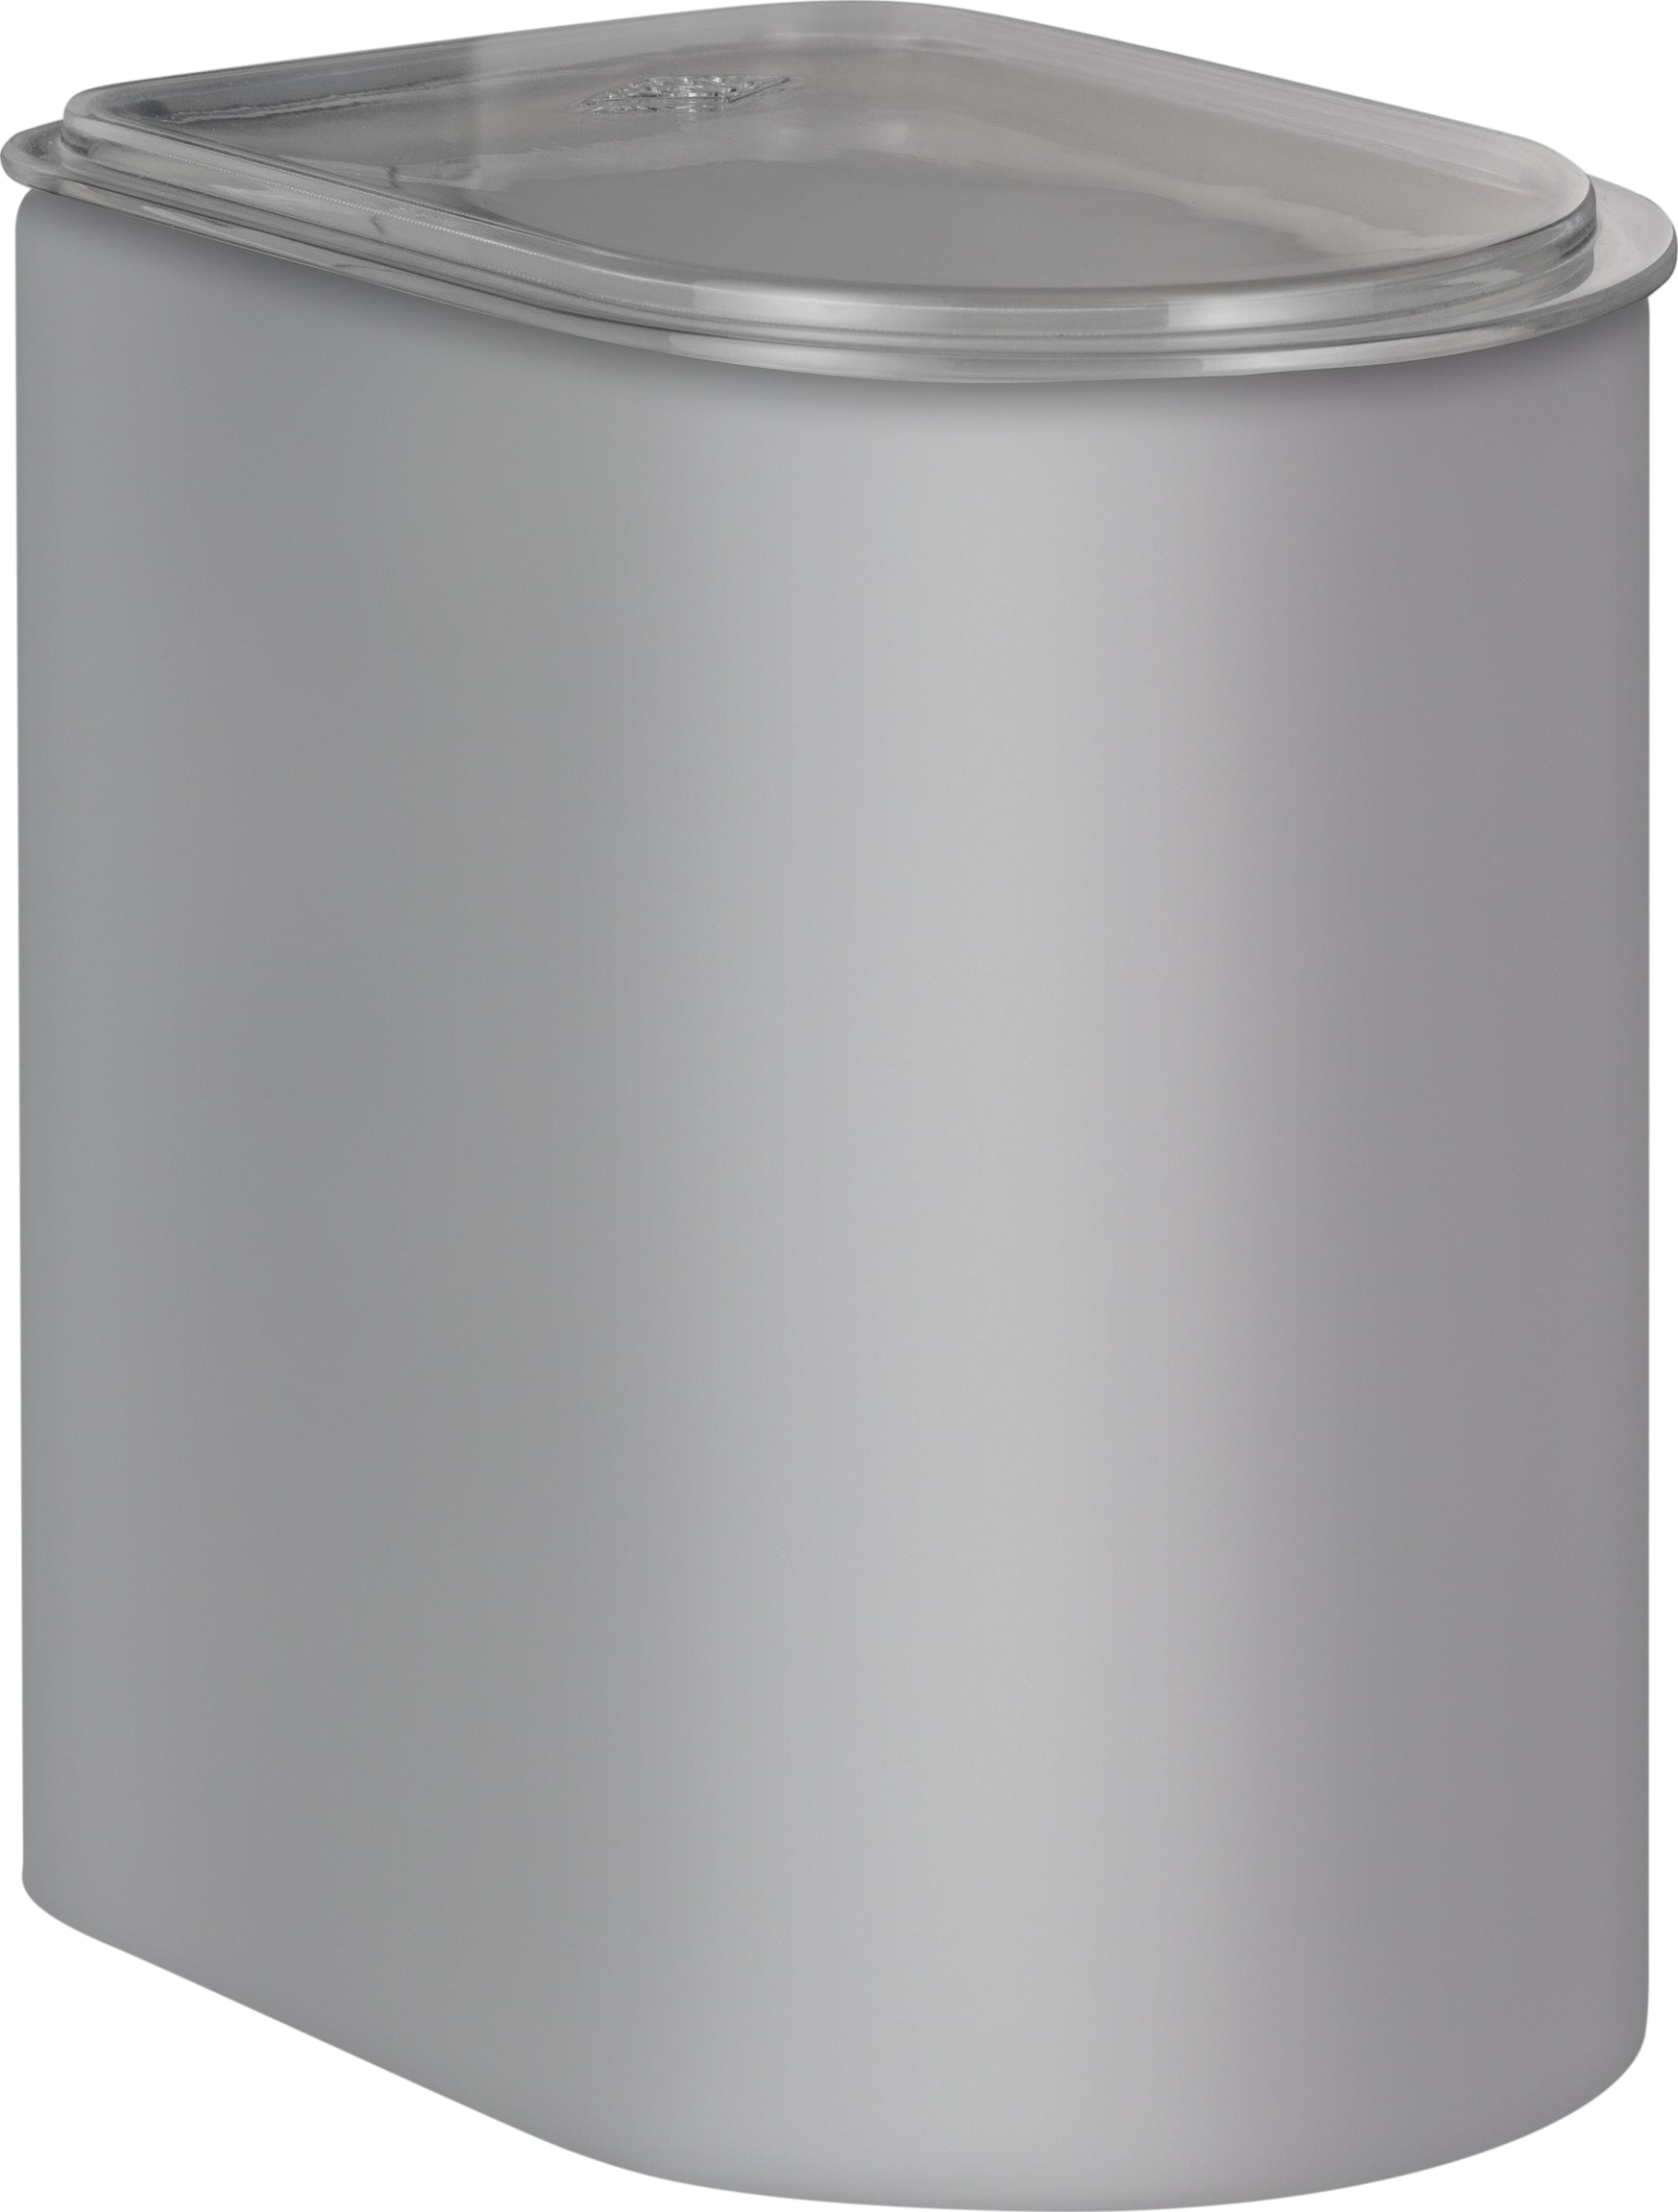 Wesco Canister 2,2 -Liter mit Acryldeckel, cooler grauer Matt